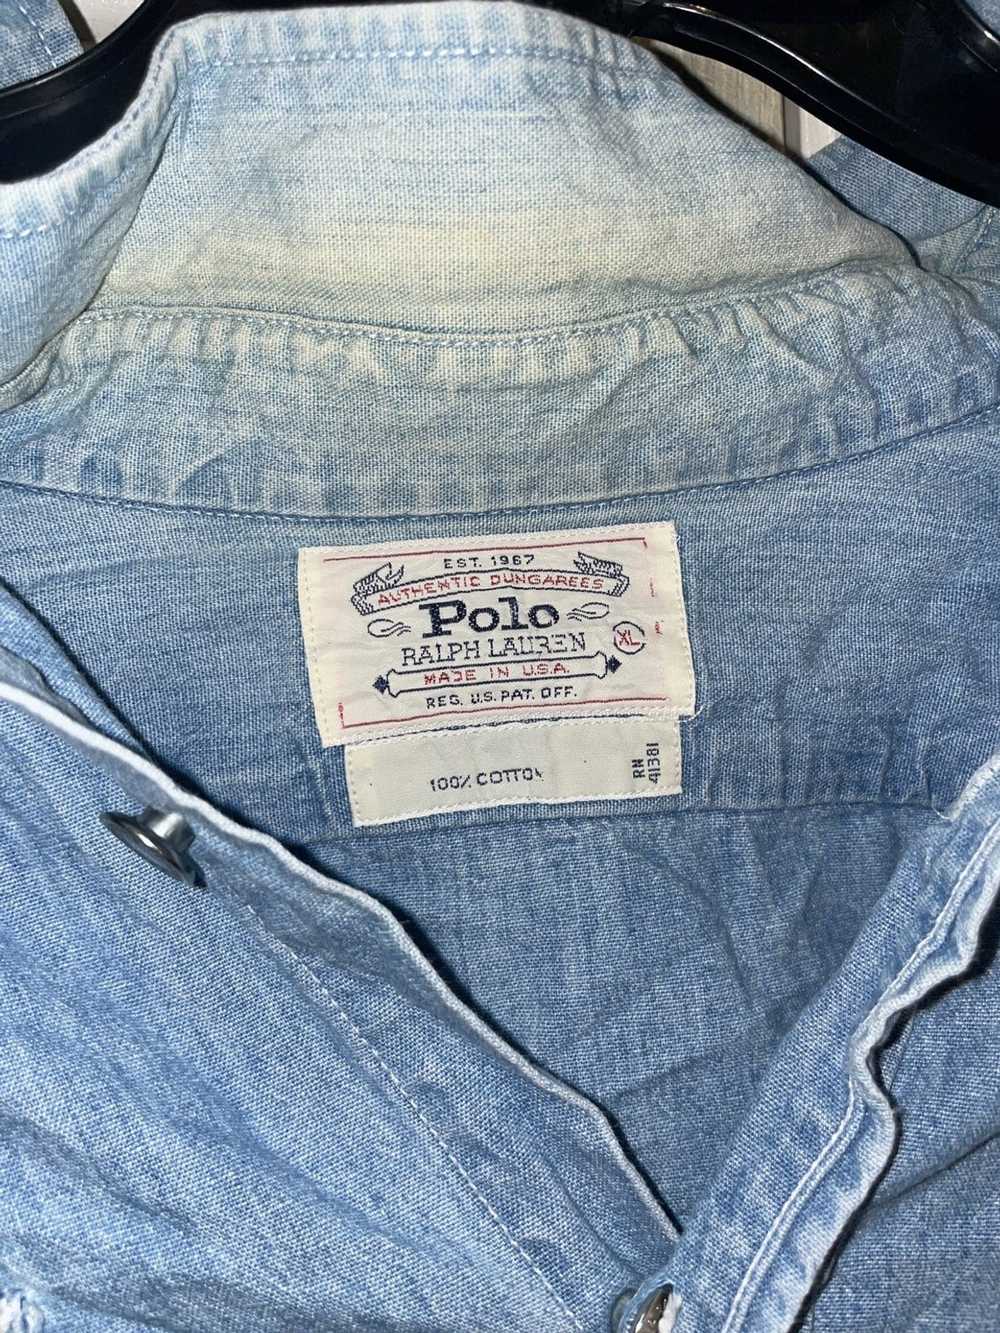 Polo Ralph Lauren Ralph Lauren Jean shirt - image 2